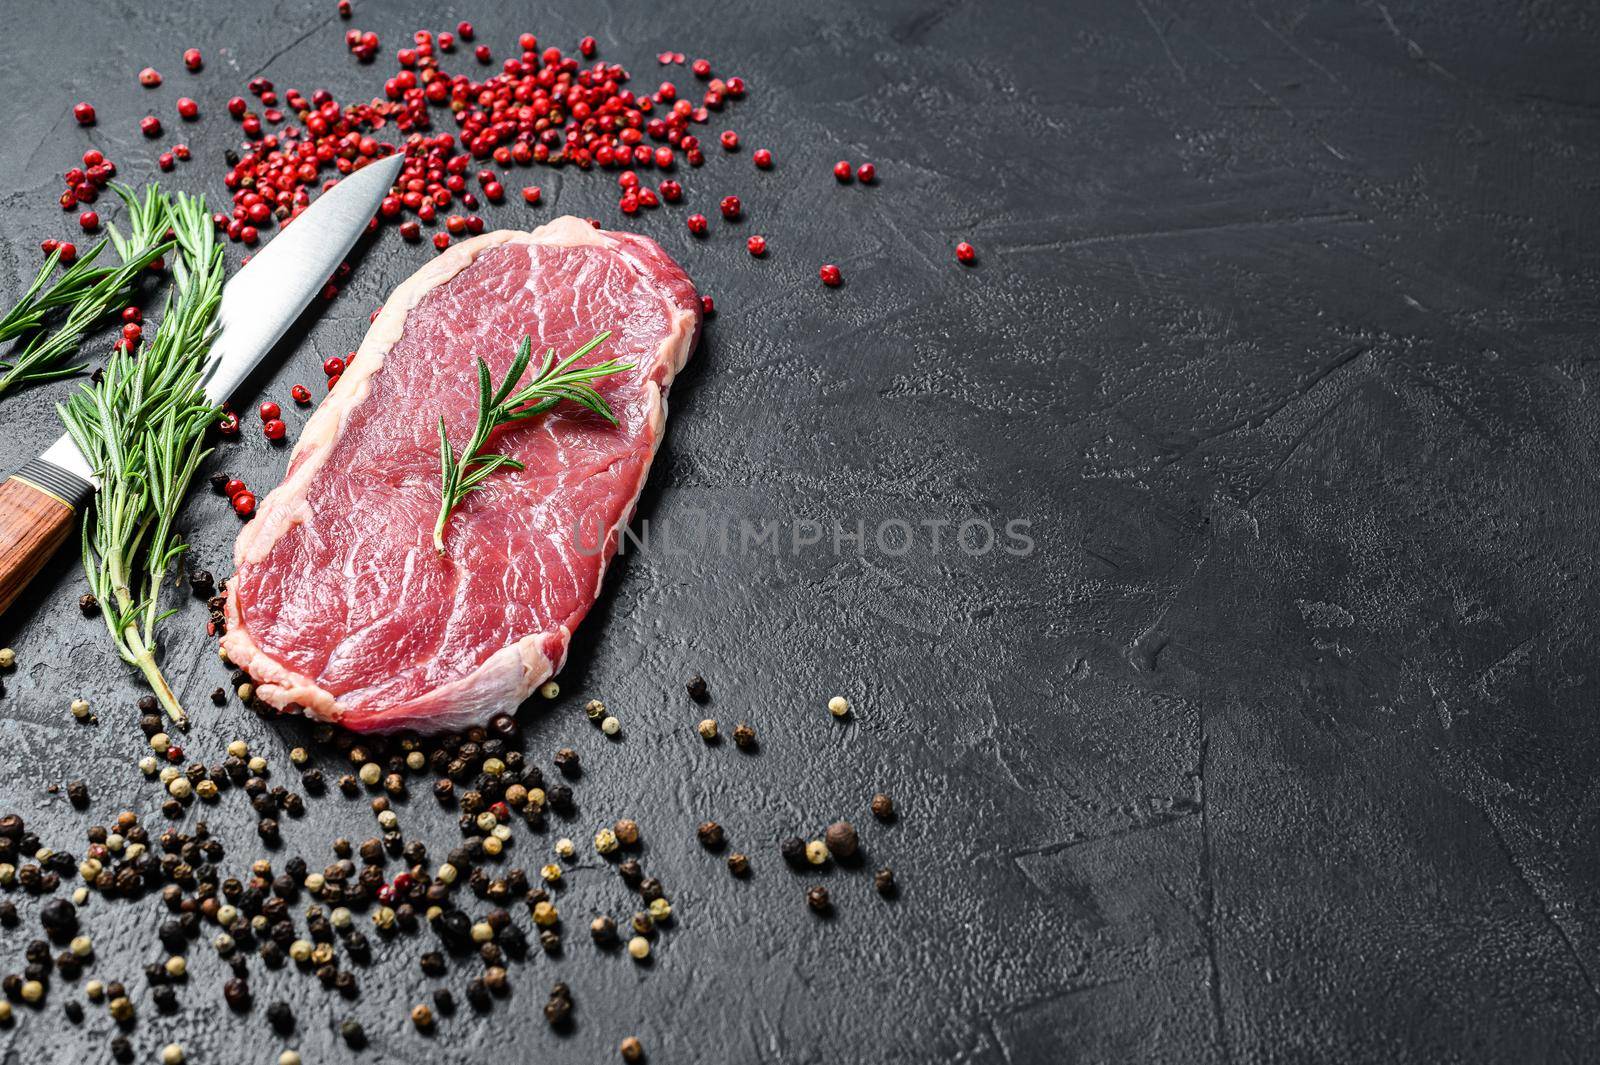 Striploin, strip loin steak or new York. Raw beef. Black background. Top view. Copy space.